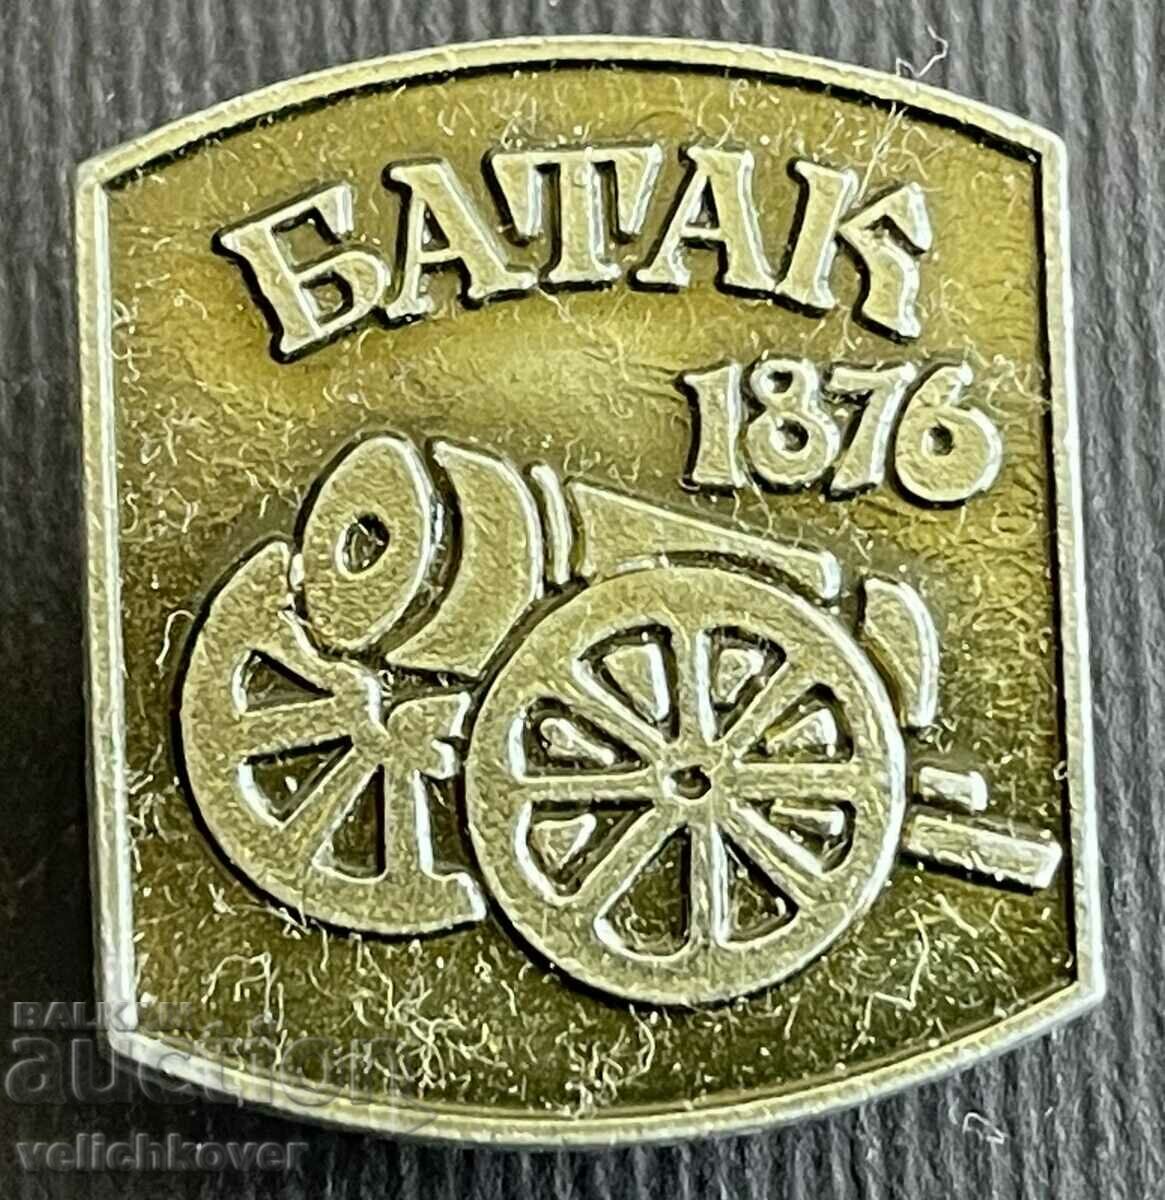 36397 Bulgaria sign 100 years. Batak 1878-1978